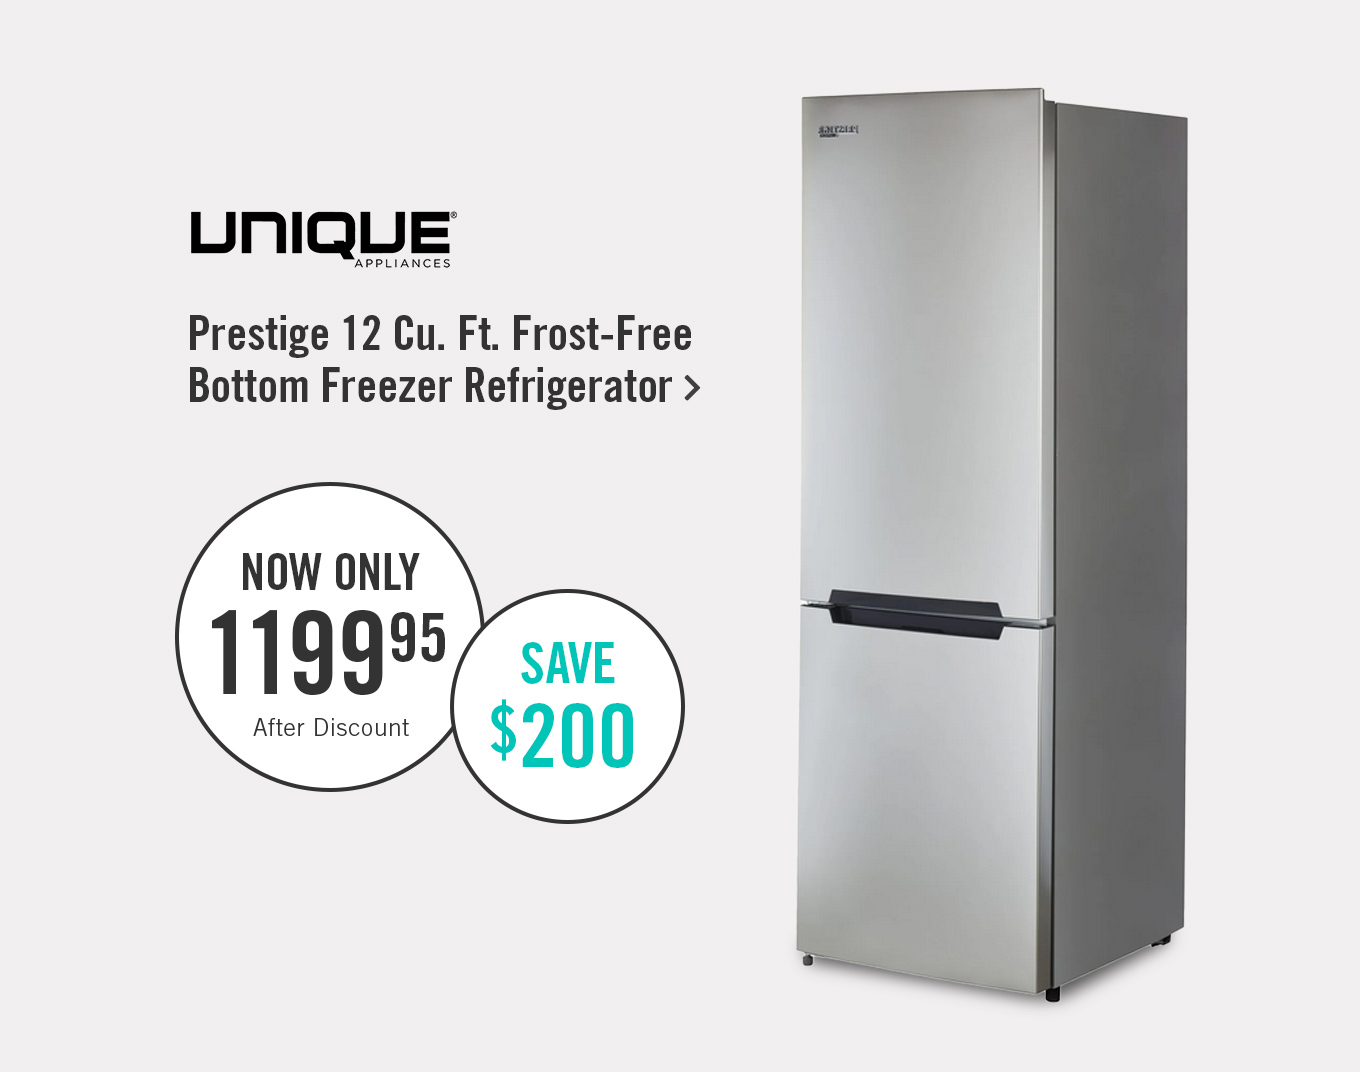 Unique Appliances Prestige 12 Cubic foot bottom freezer refrigerator.